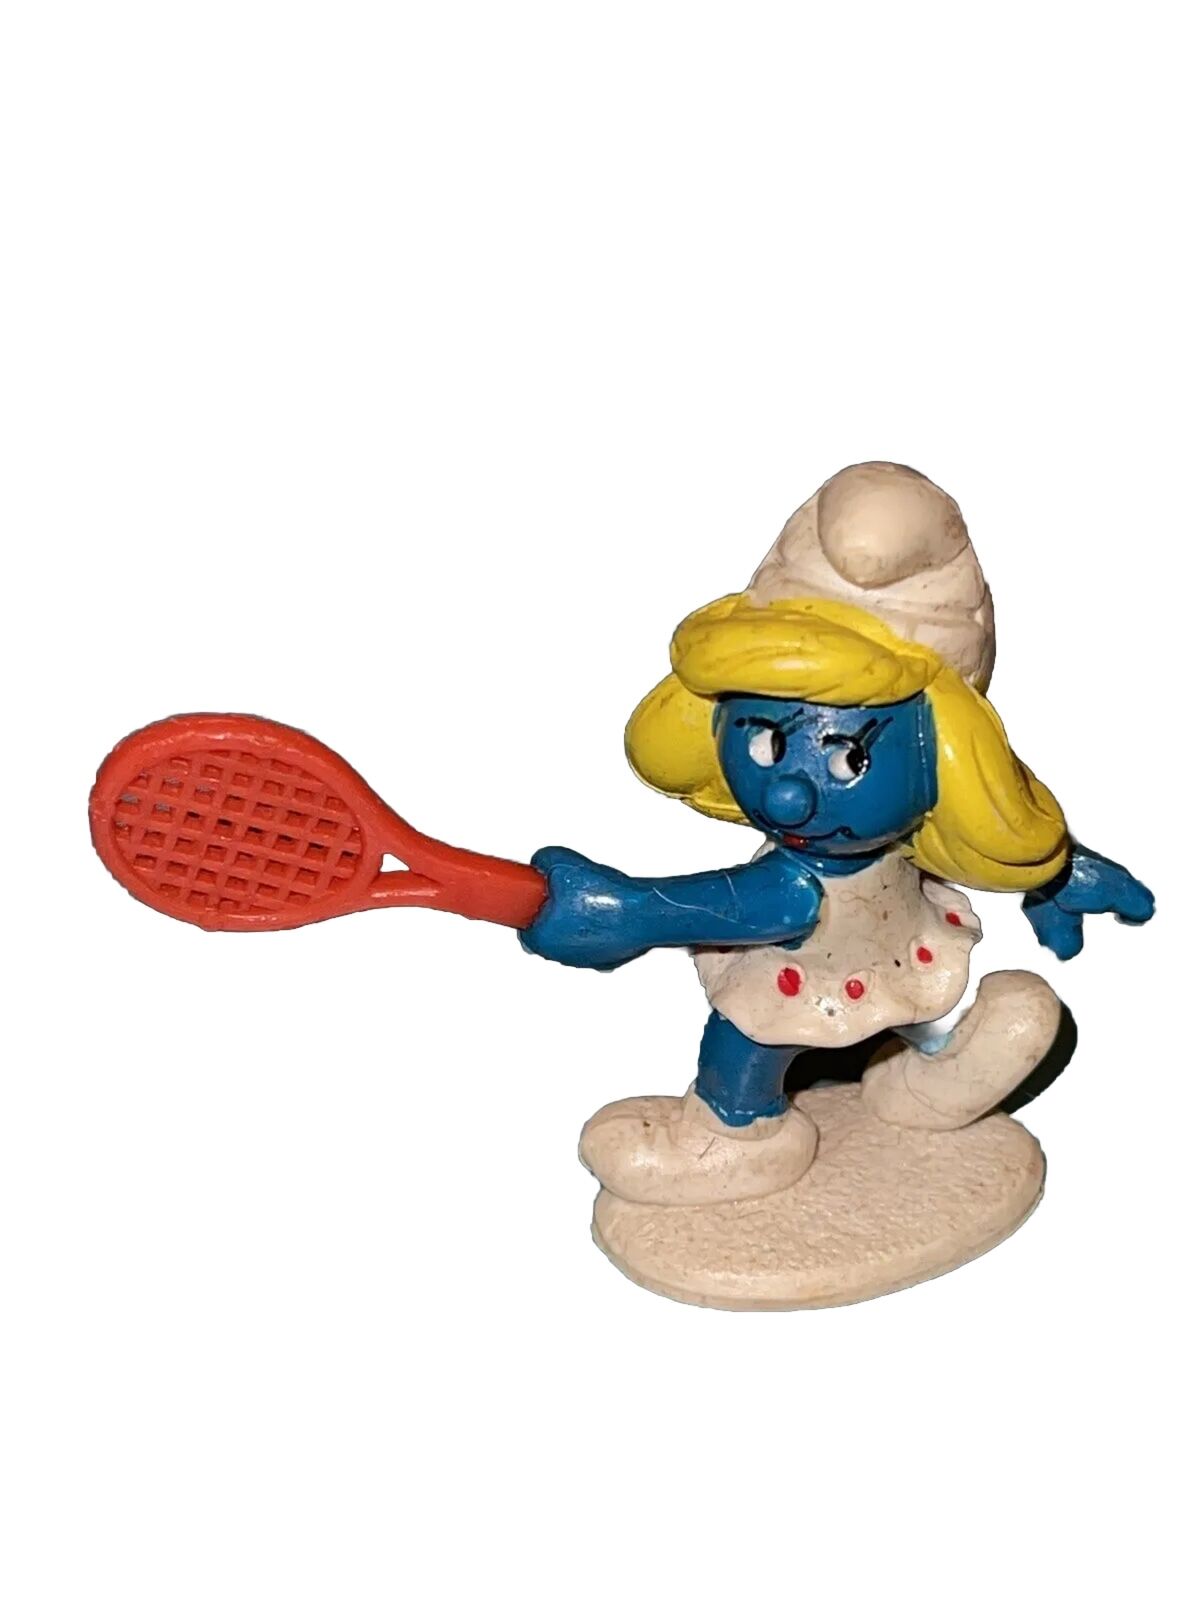 Smurfs - Tennis Smurfette -Vintage Original PVC Display Figurine